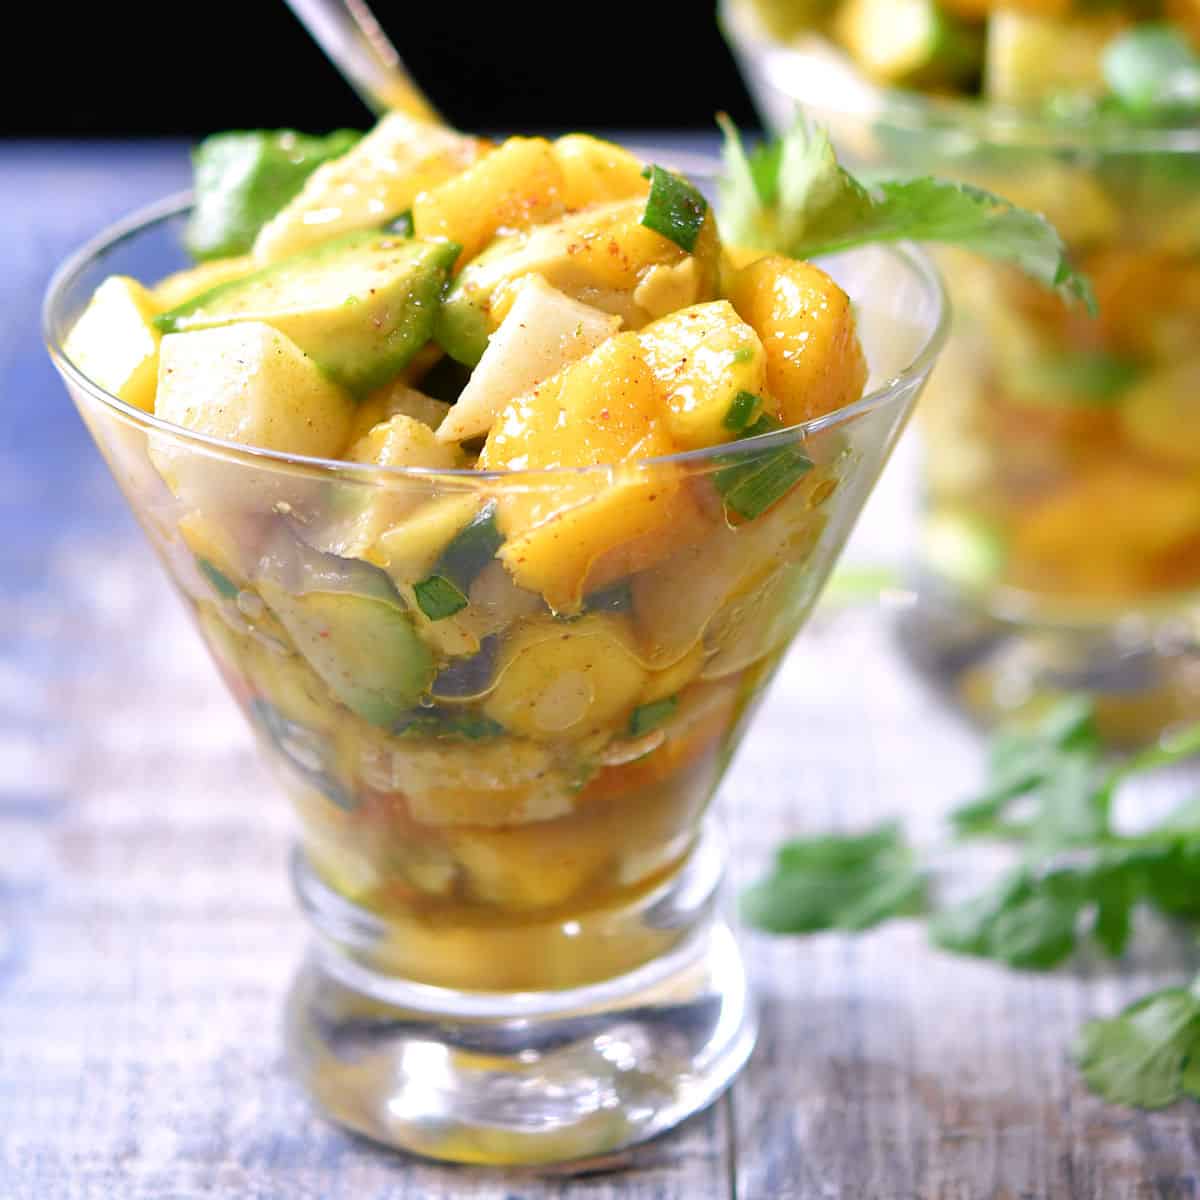 24Bite: Mango Avocado Salad Recipe by Christian Guzman